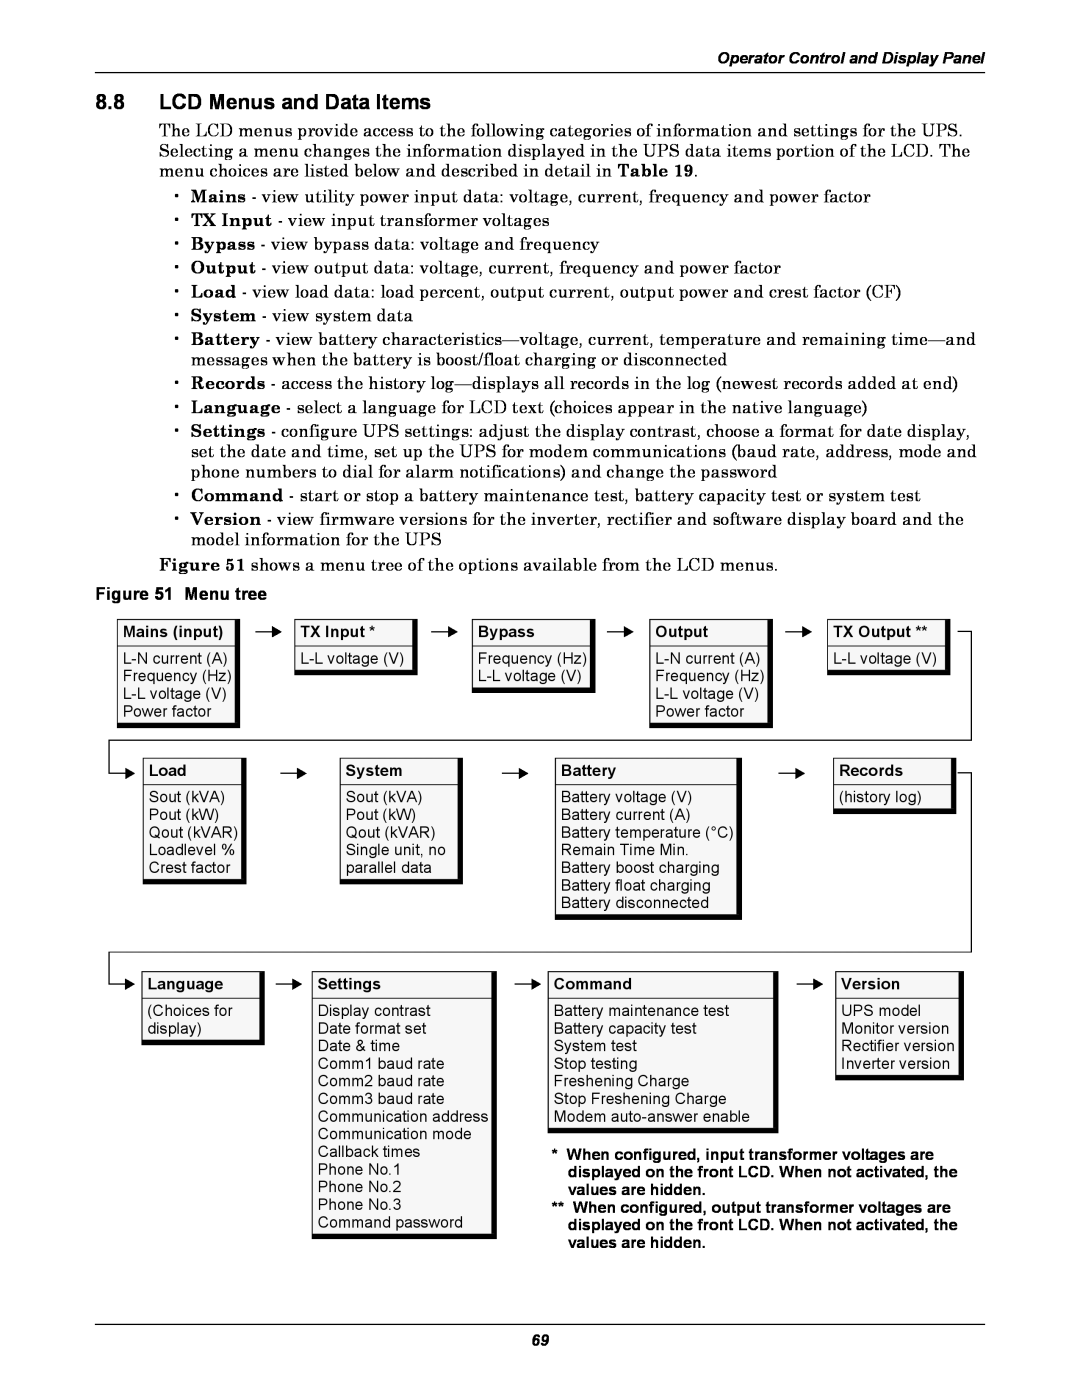 Emerson 480V, 60HZ user manual 8.8LCD Menus and Data Items, Menu tree 